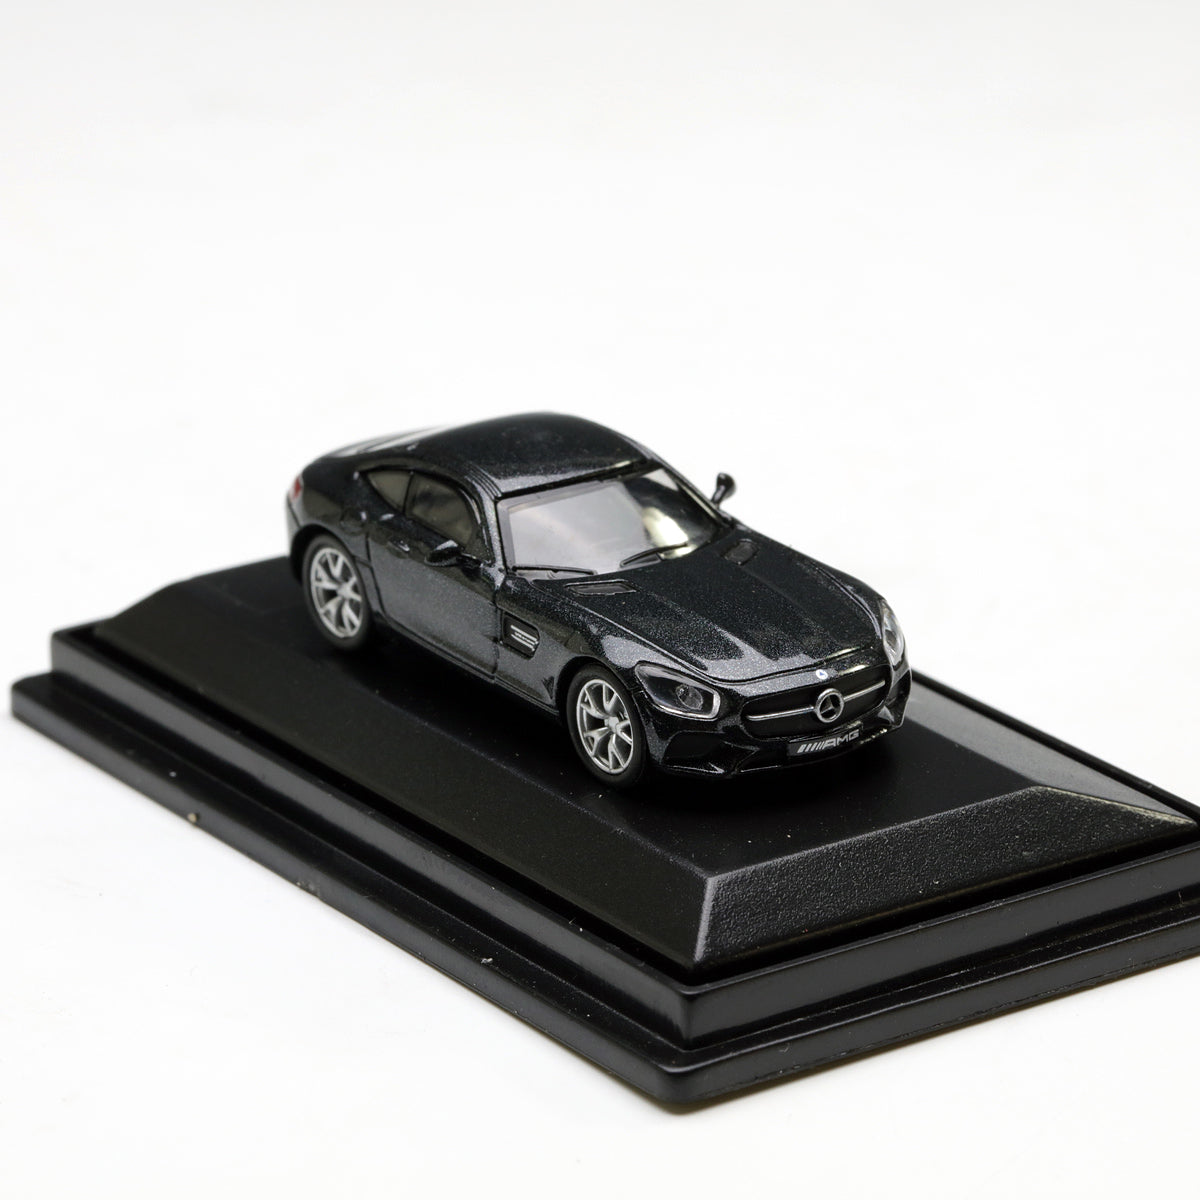 Schuco 1:87 Mercedes-AMG GT S Metallic Black 452620500